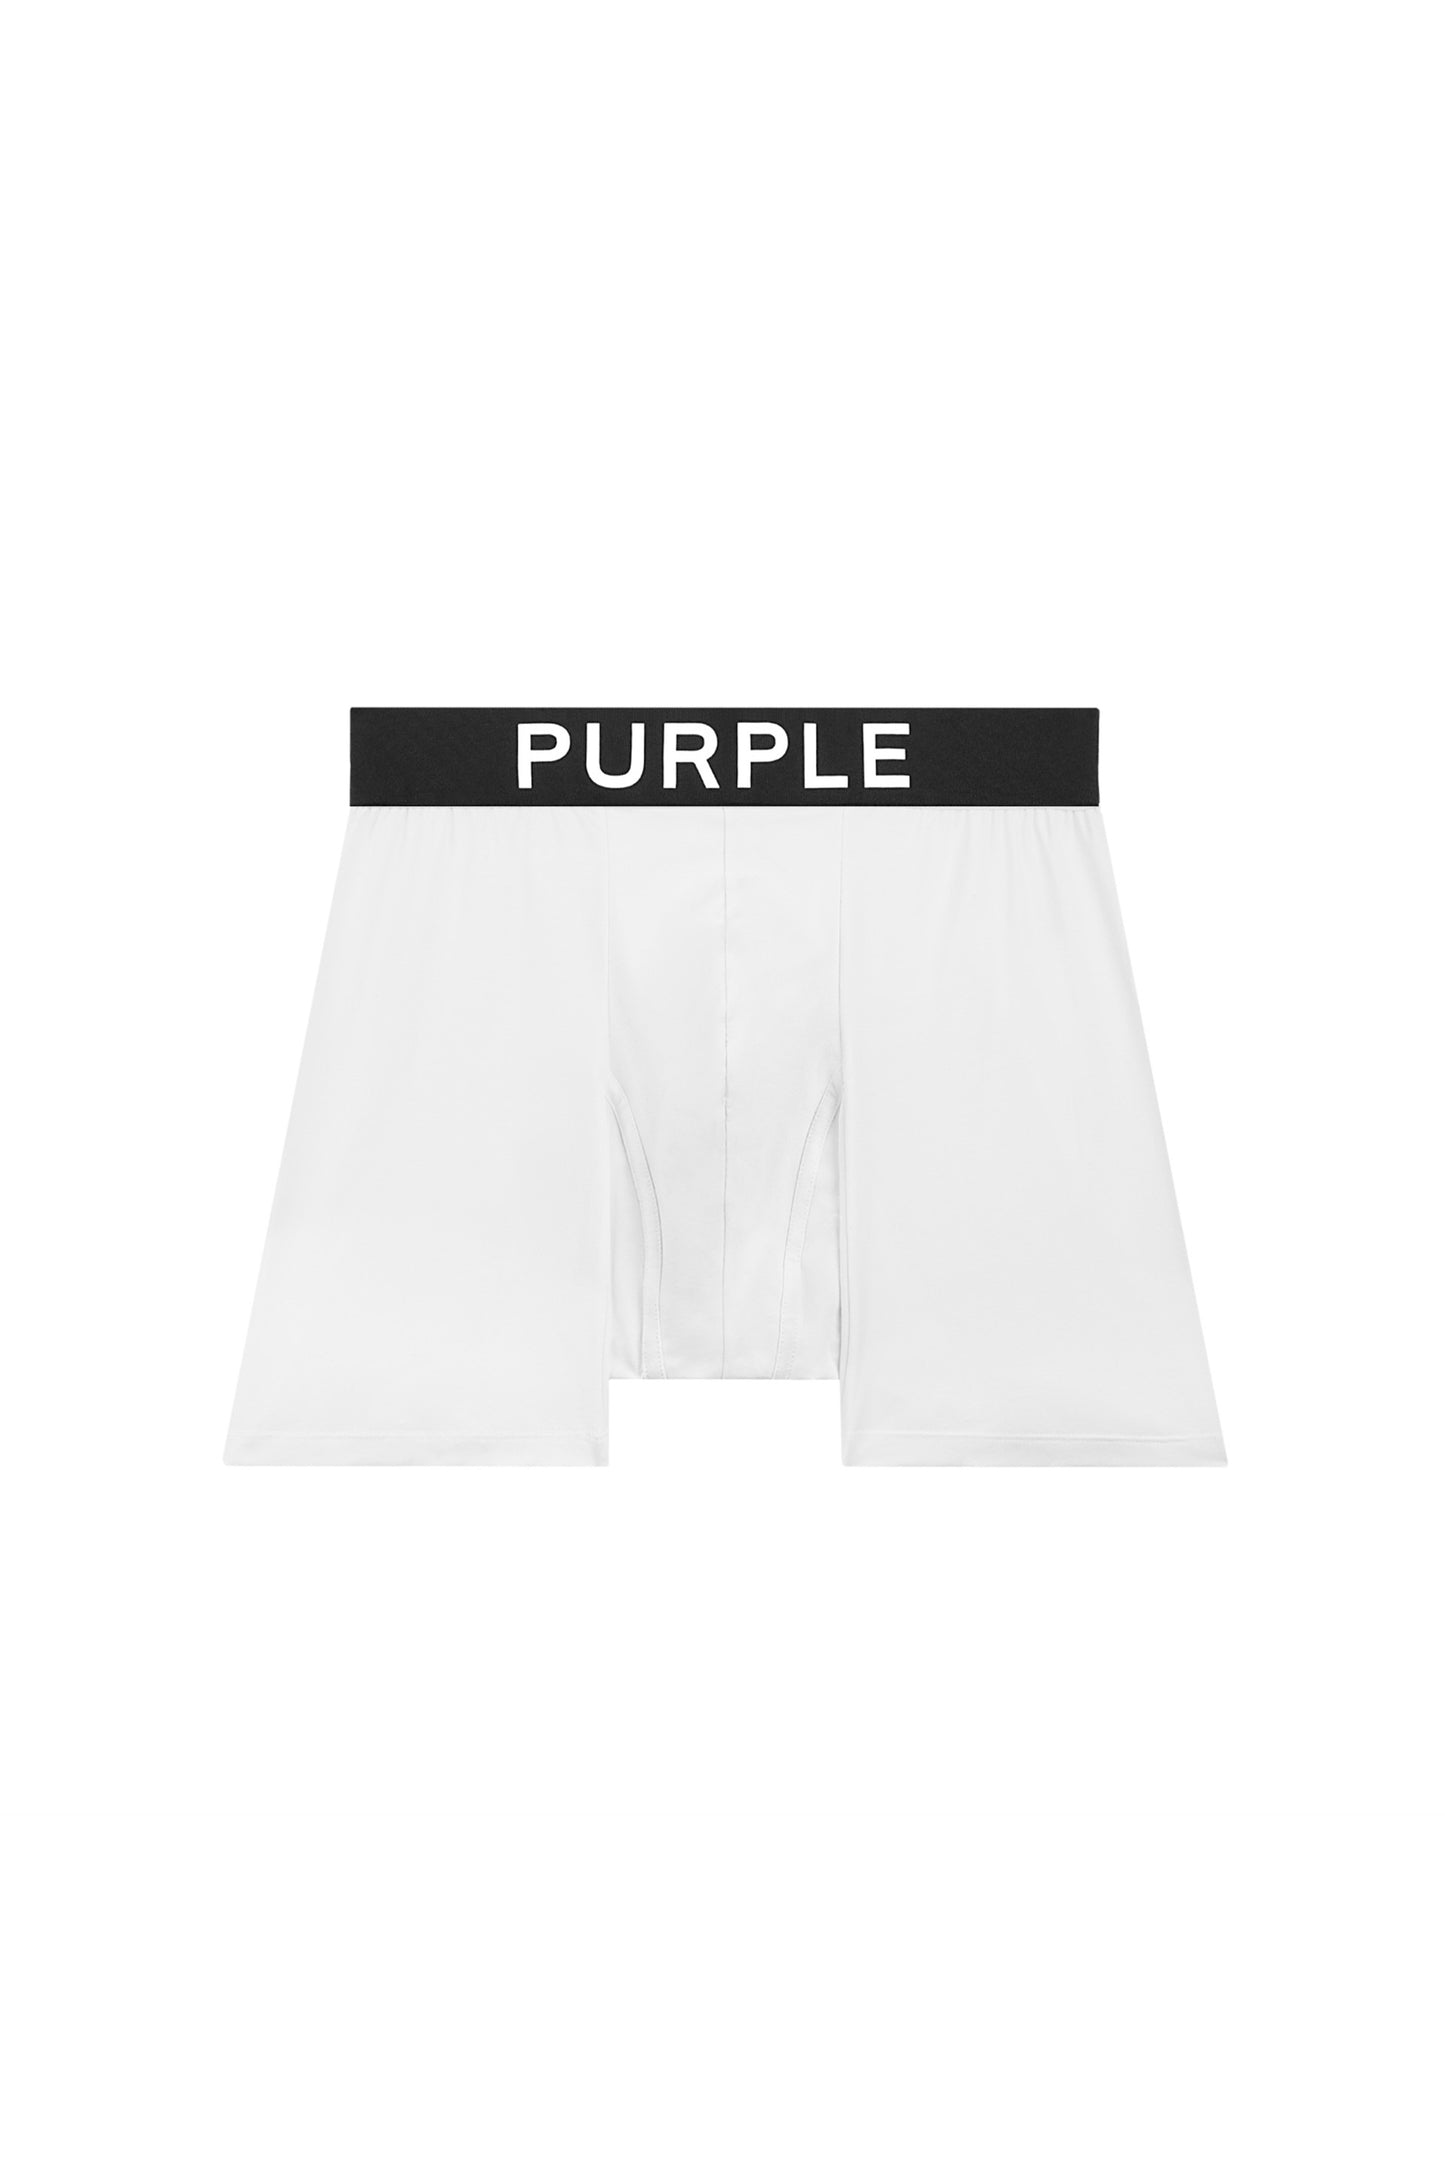 CRIVIT Performance Purple Underwear BNWT (RARE & COLLECTABLE) 4304493040434  on eBid United States